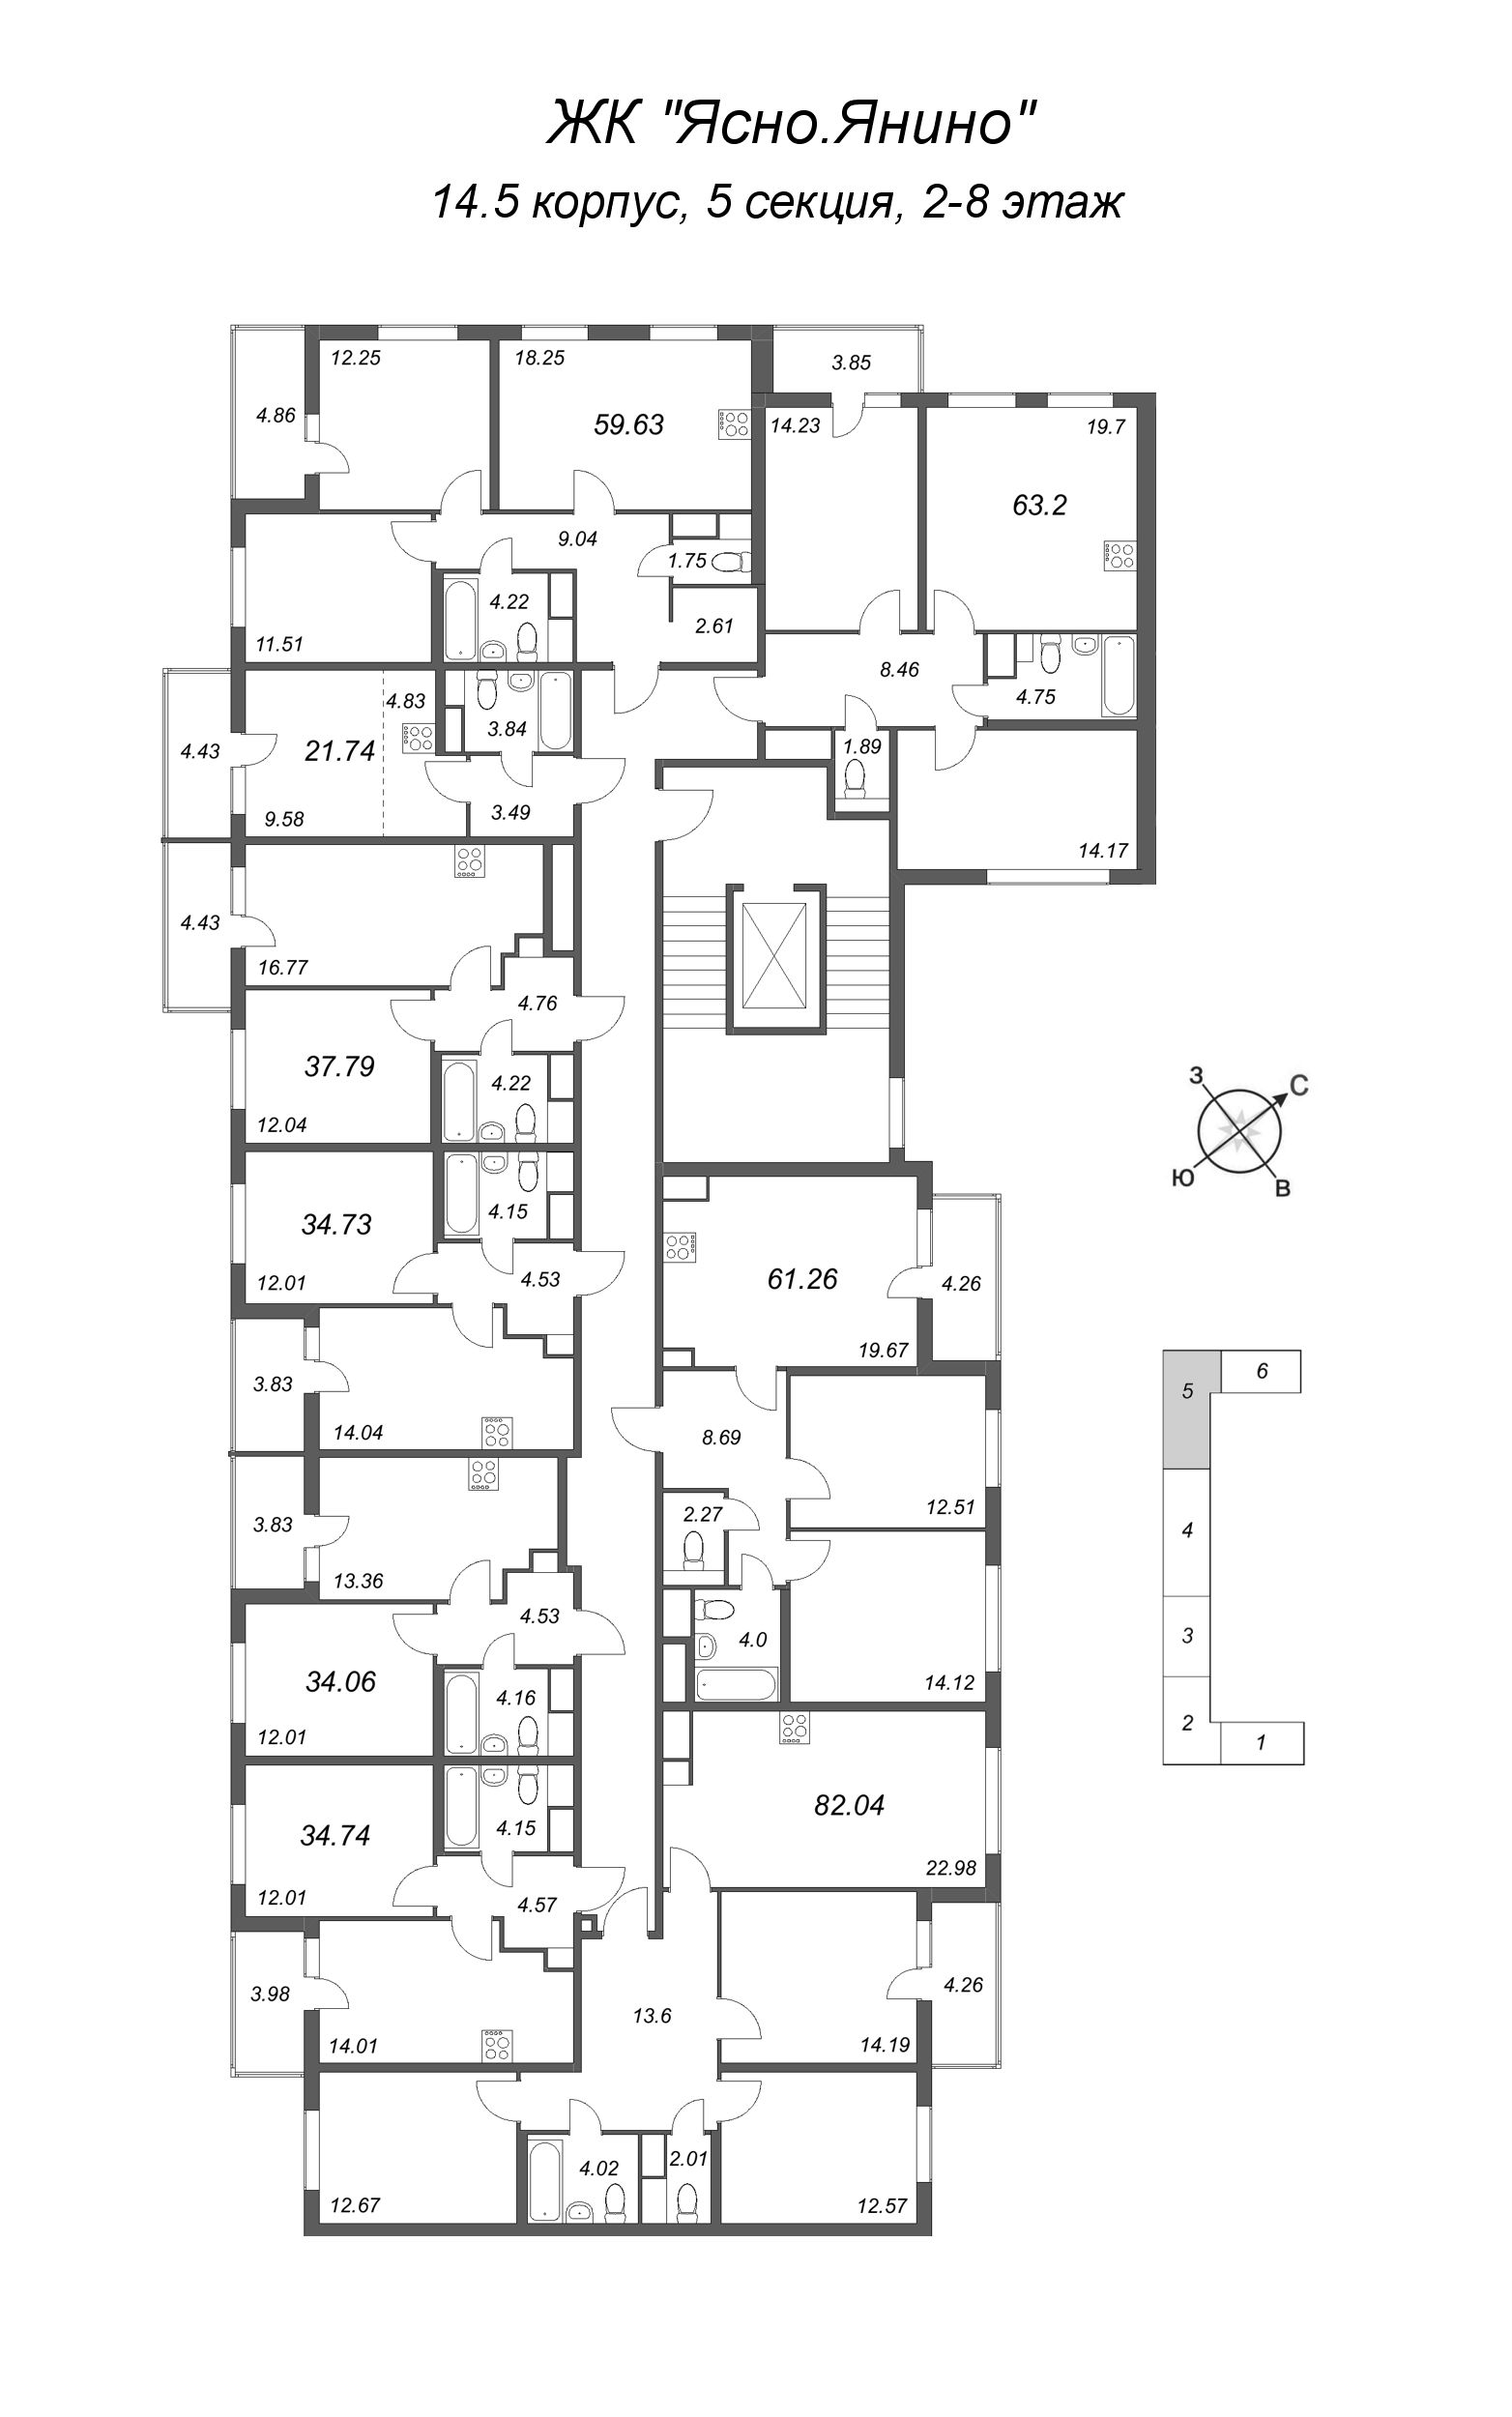 1-комнатная квартира, 34.06 м² в ЖК "Ясно.Янино" - планировка этажа